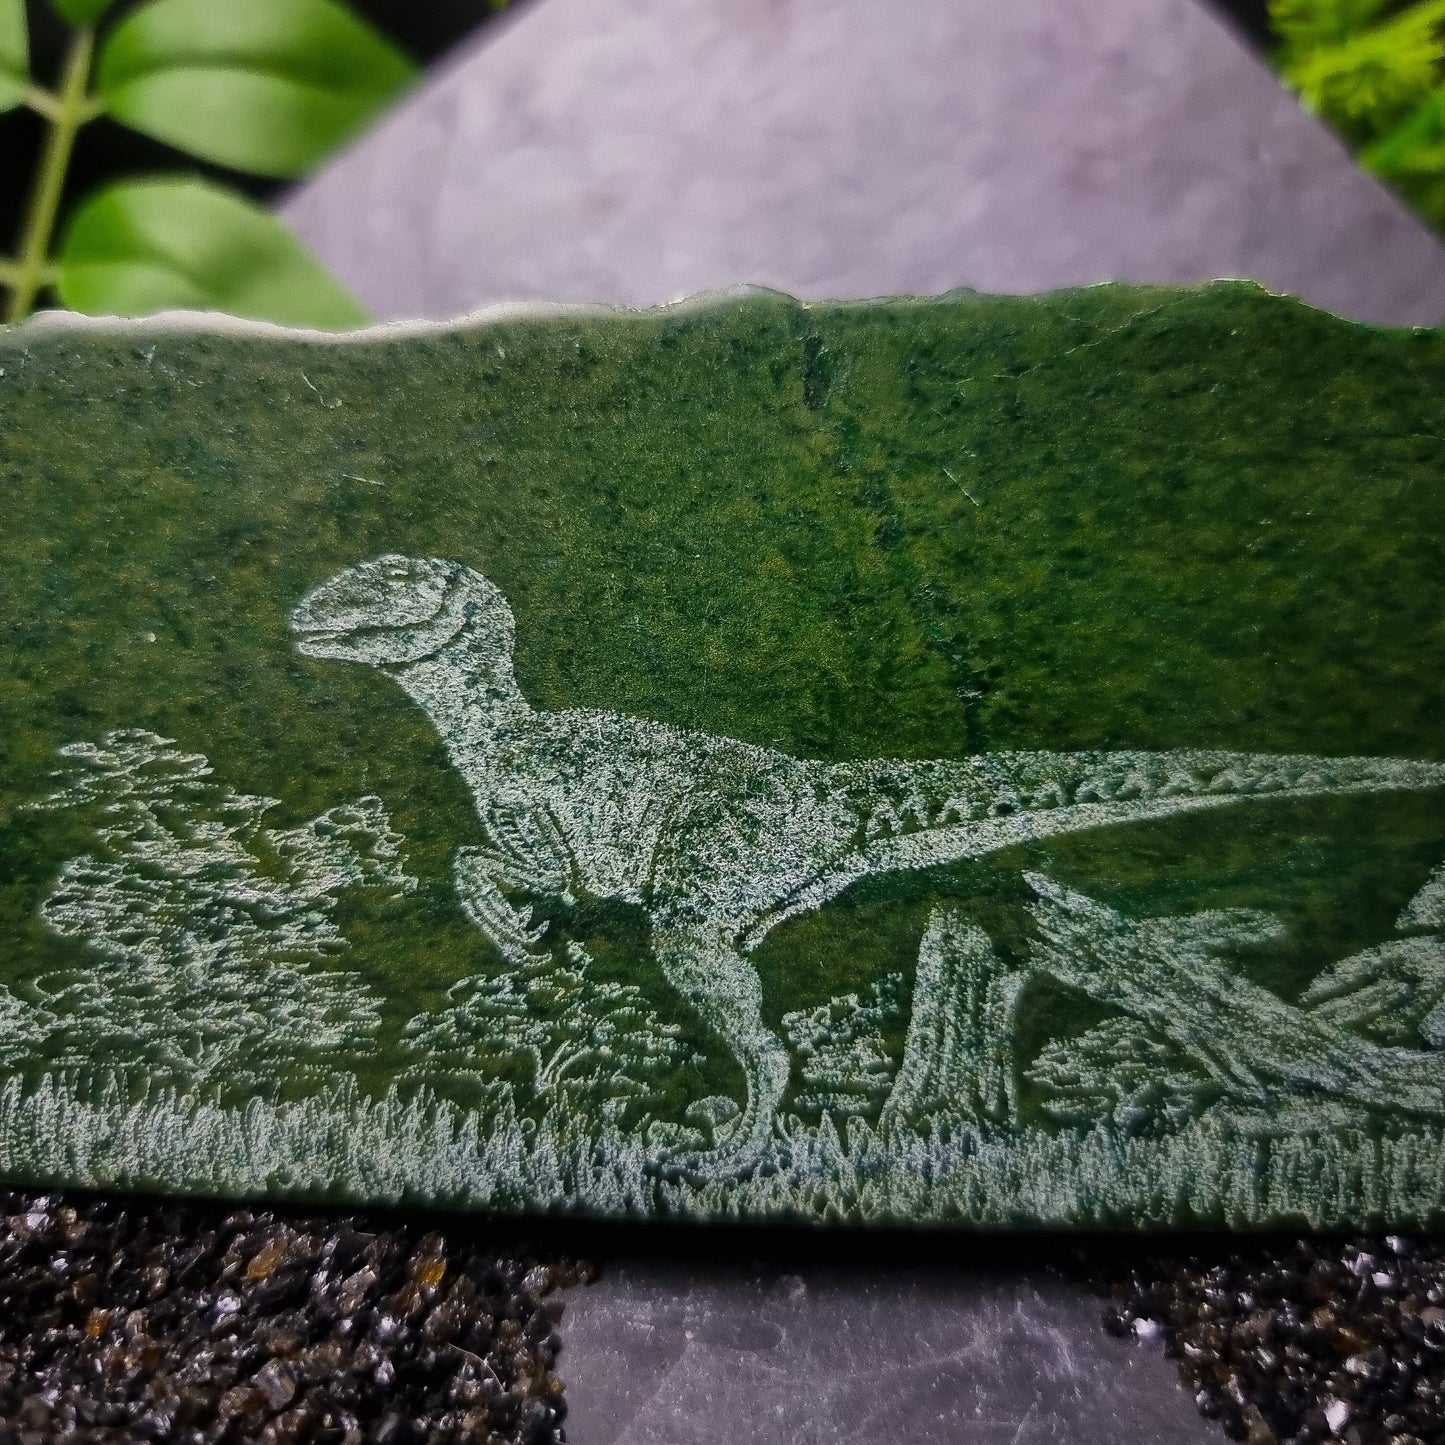 Verdite with Dinosaur Engraving